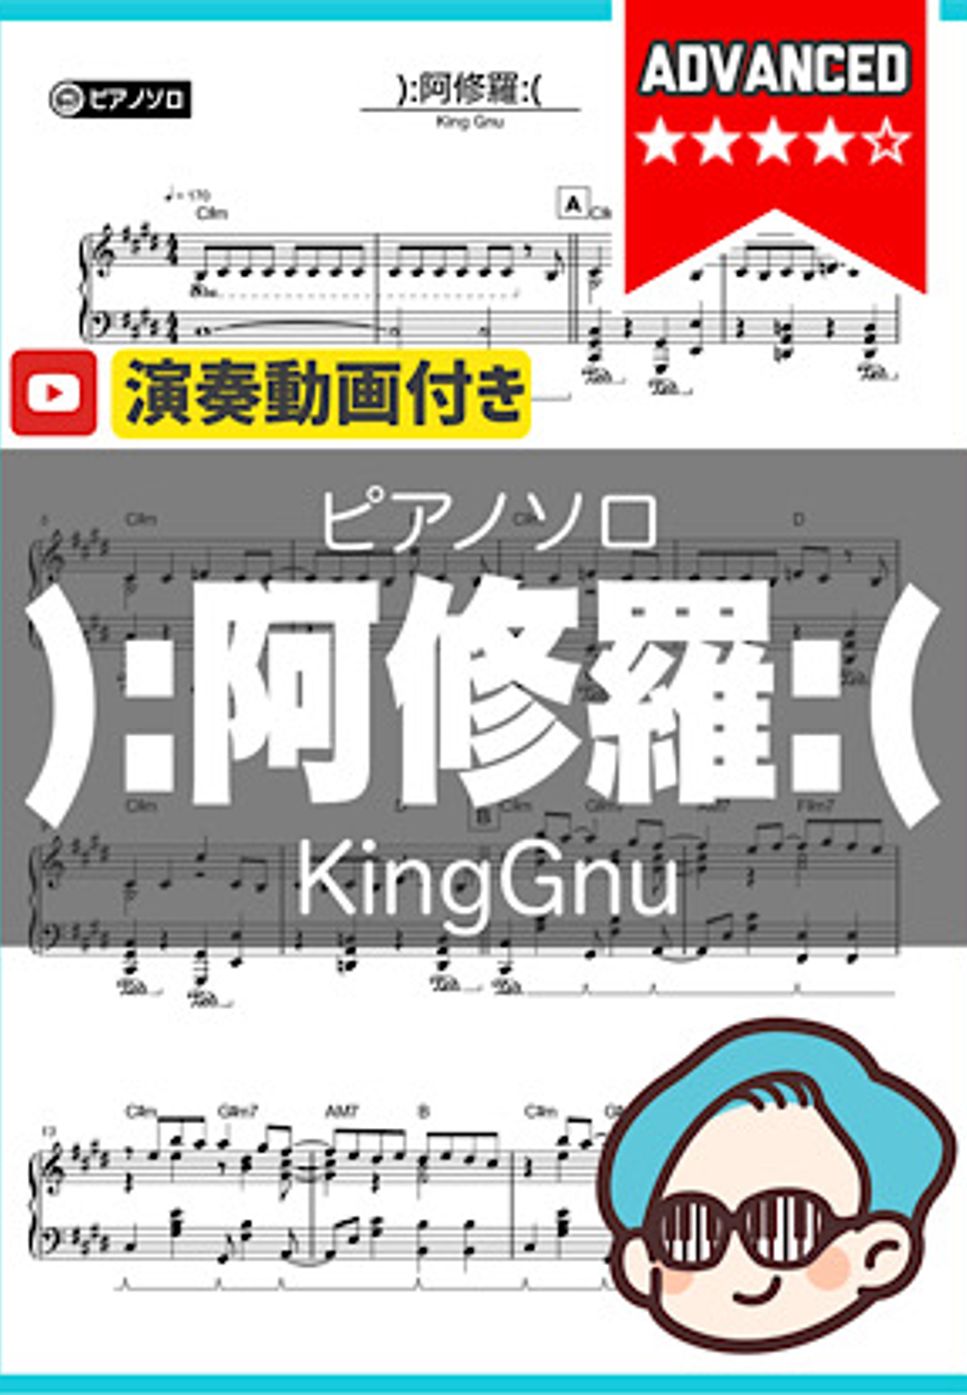 King Gnu - ):阿修羅:( by シータピアノ